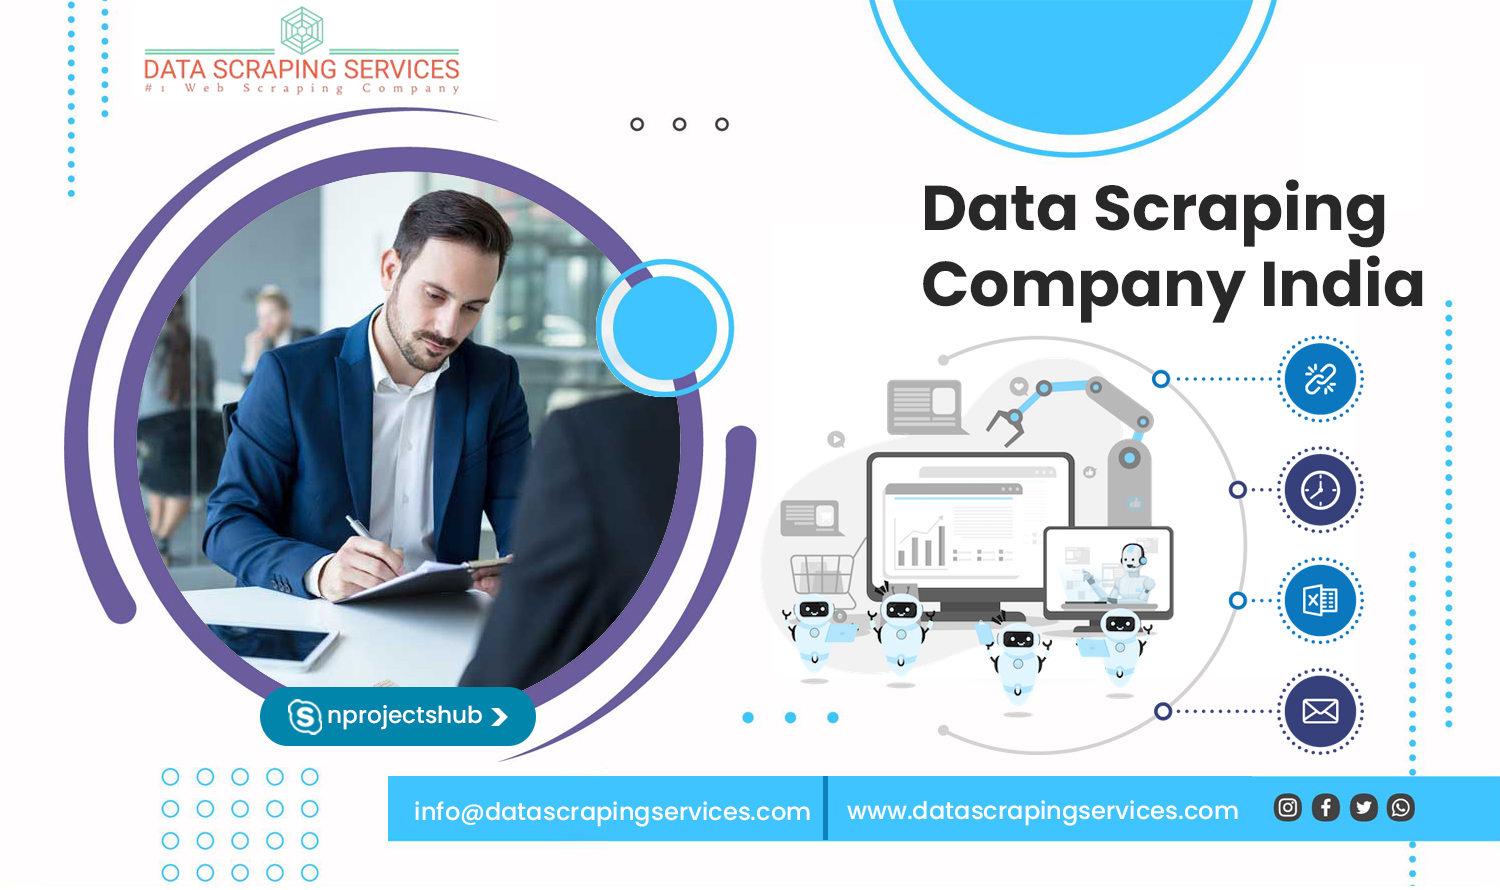 Data Scraping Company India